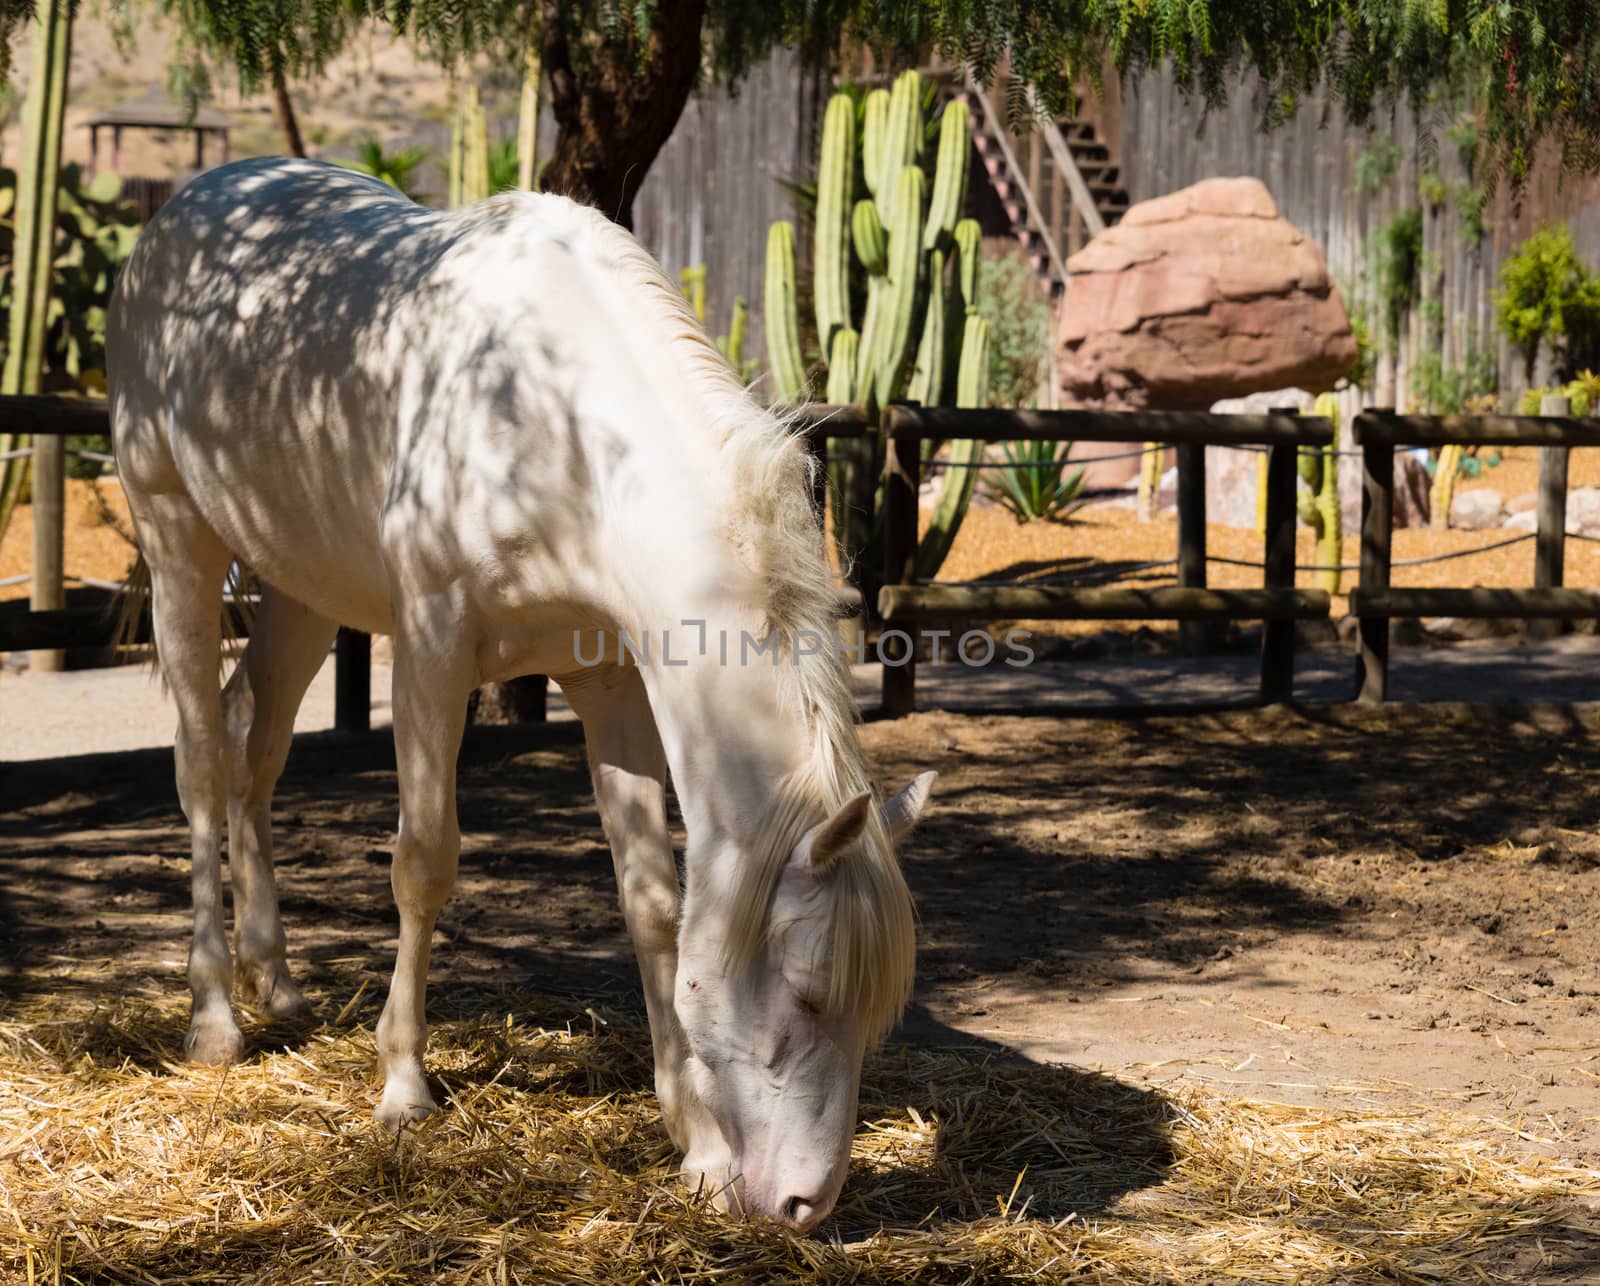 white horse eating straw by jcdiazhidalgo